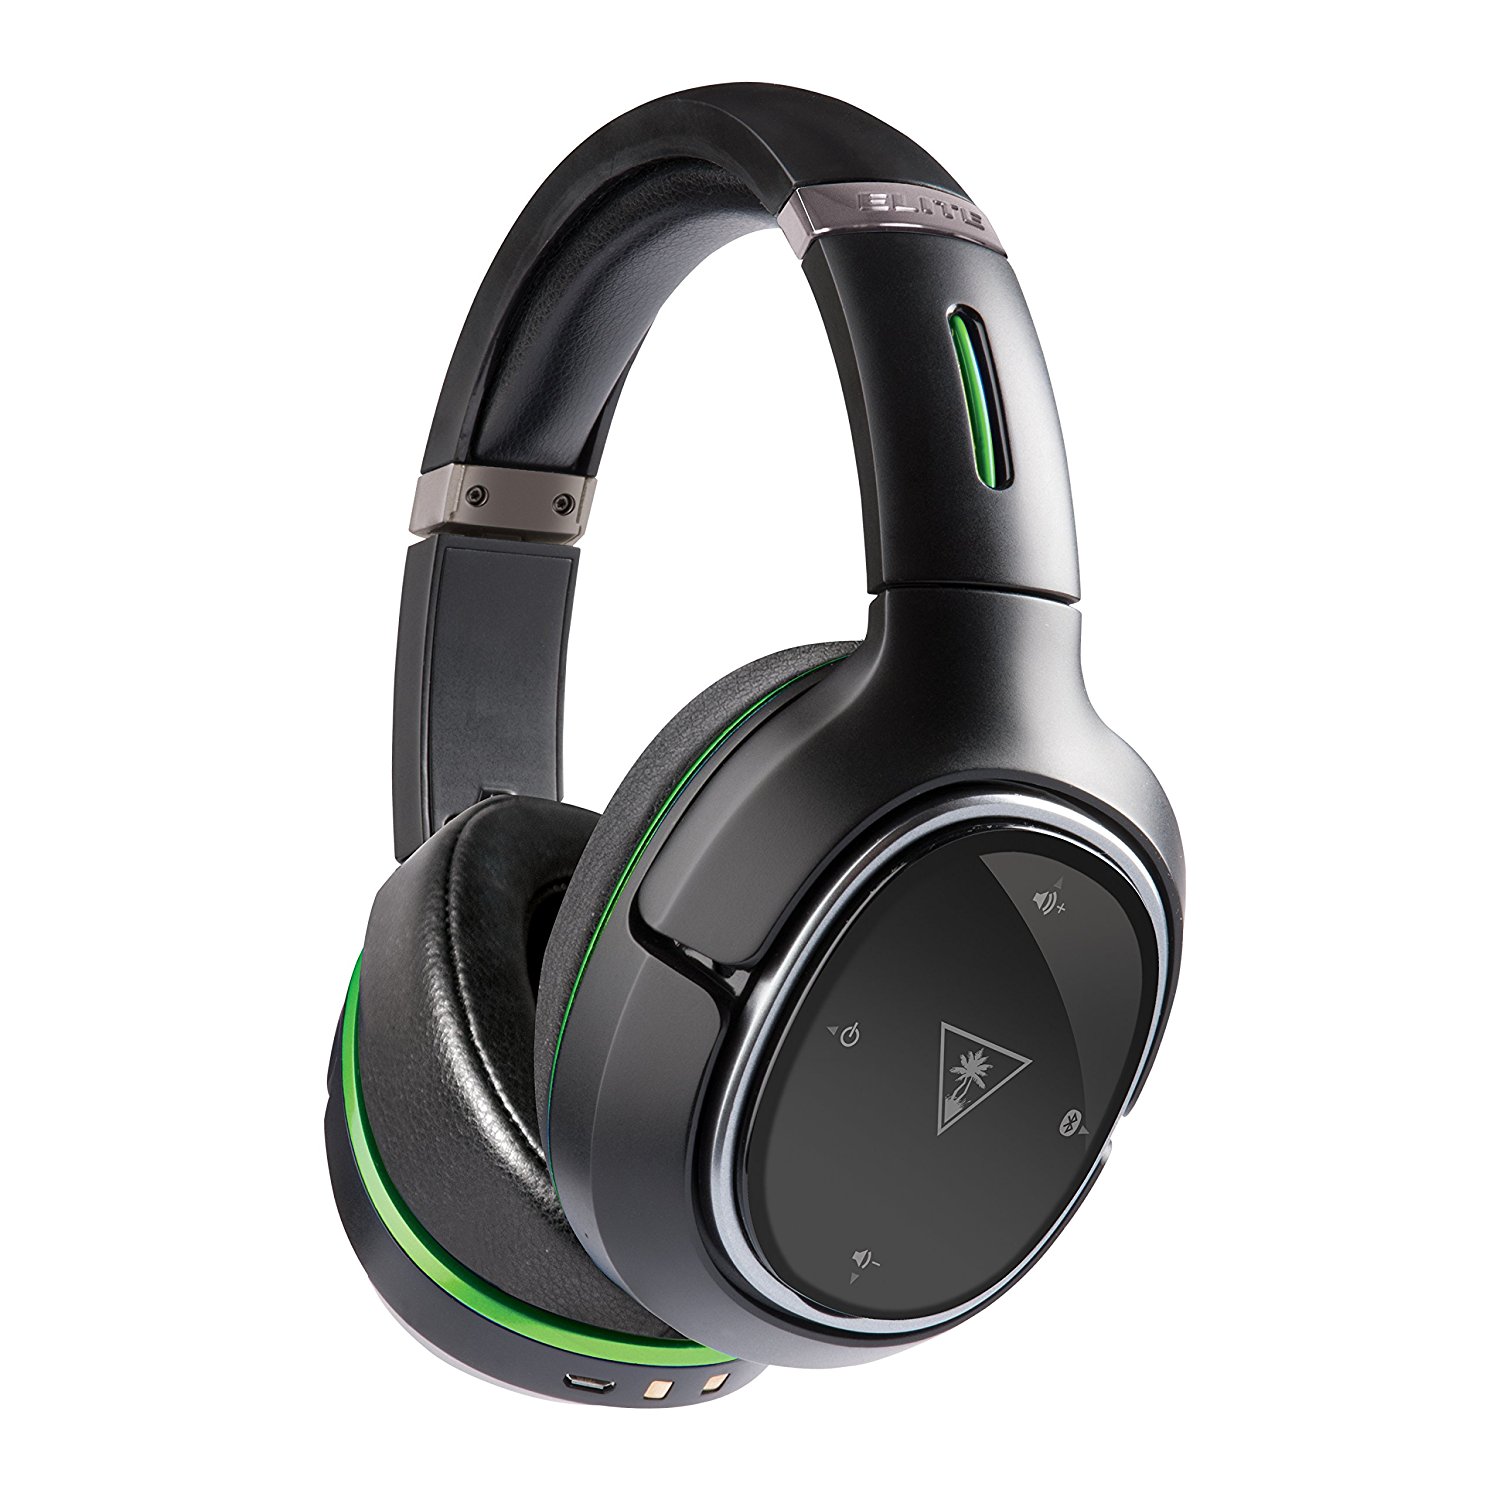 Turtle Beach -Ear Force Elite 800X Premium完全无线游戏耳机-DTS耳机：X 7.1环绕声-噪音消除-Xbox One，移动设备